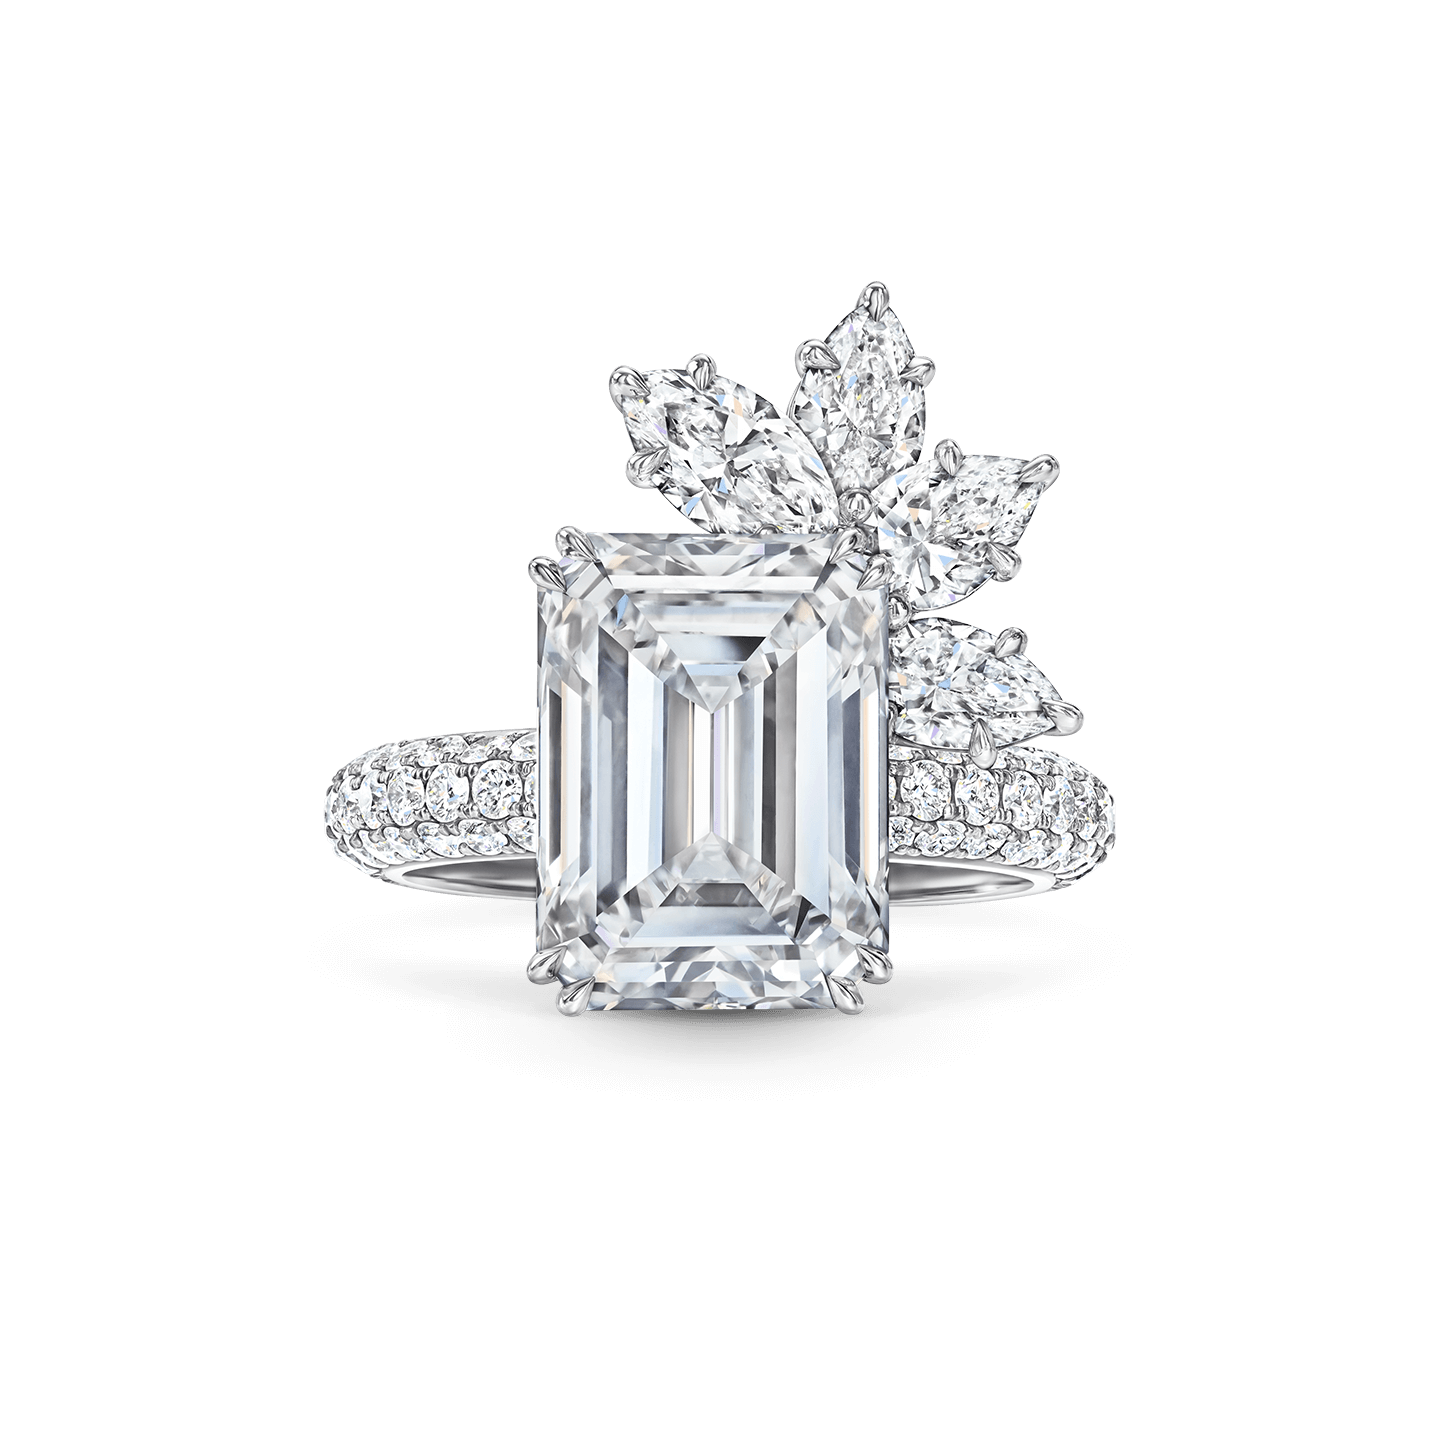 The 17-carat emerald-cut diamond engagement ring by HarryWinston | Emerald  cut diamond engagement ring, Popular engagement rings, Fashion rings